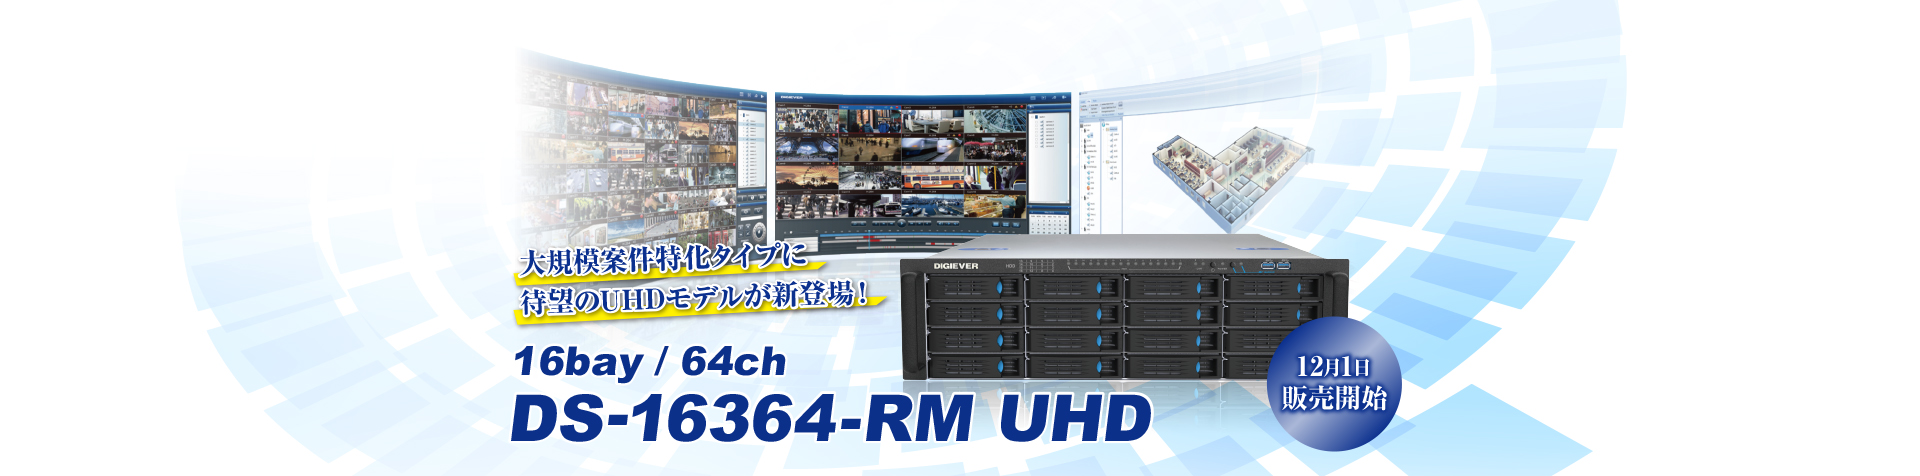 DS-16364-RM UHD販売開始の案内